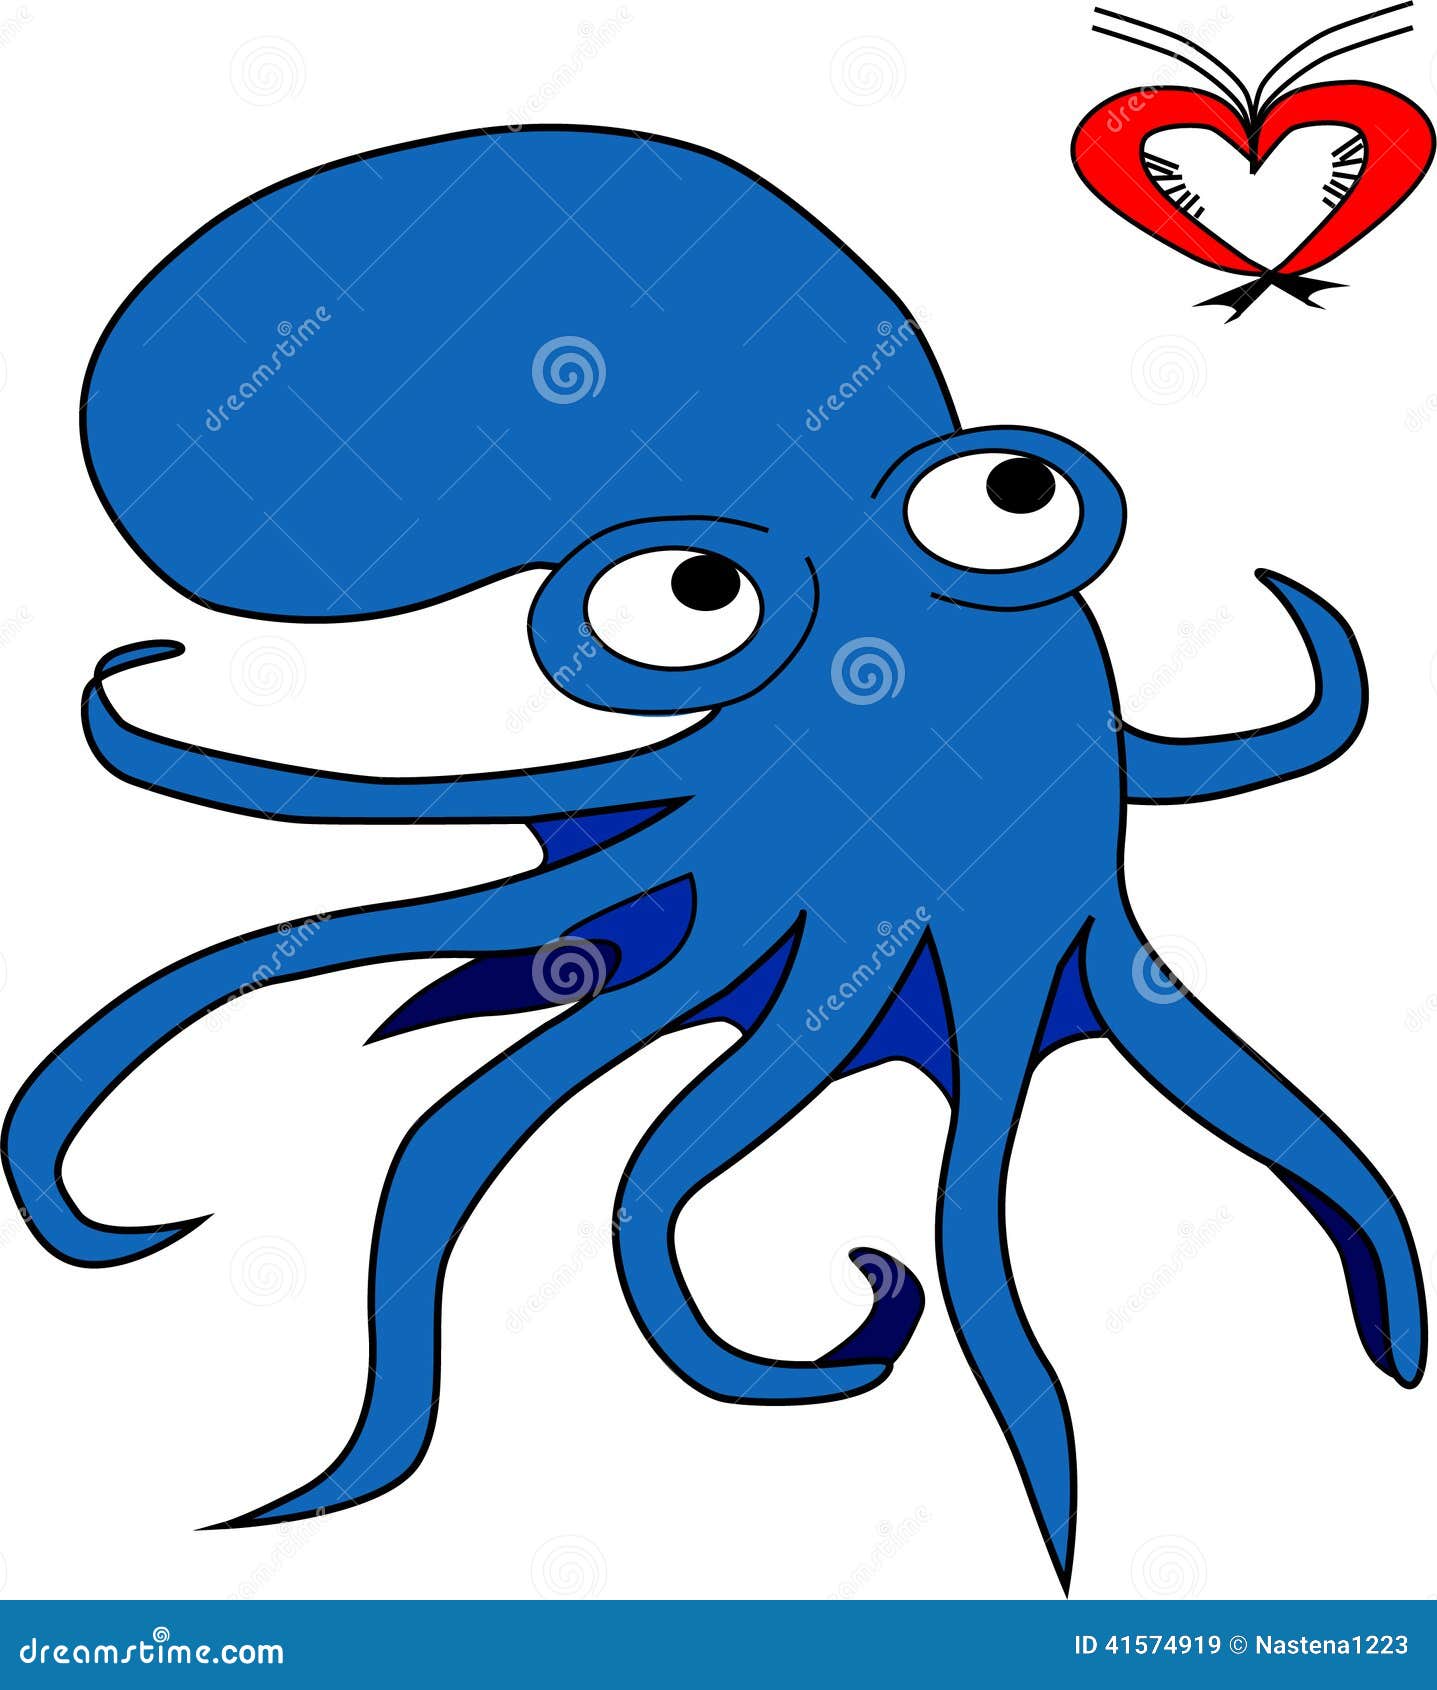 The octopus stock vector. Illustration of music, headphones - 41574919